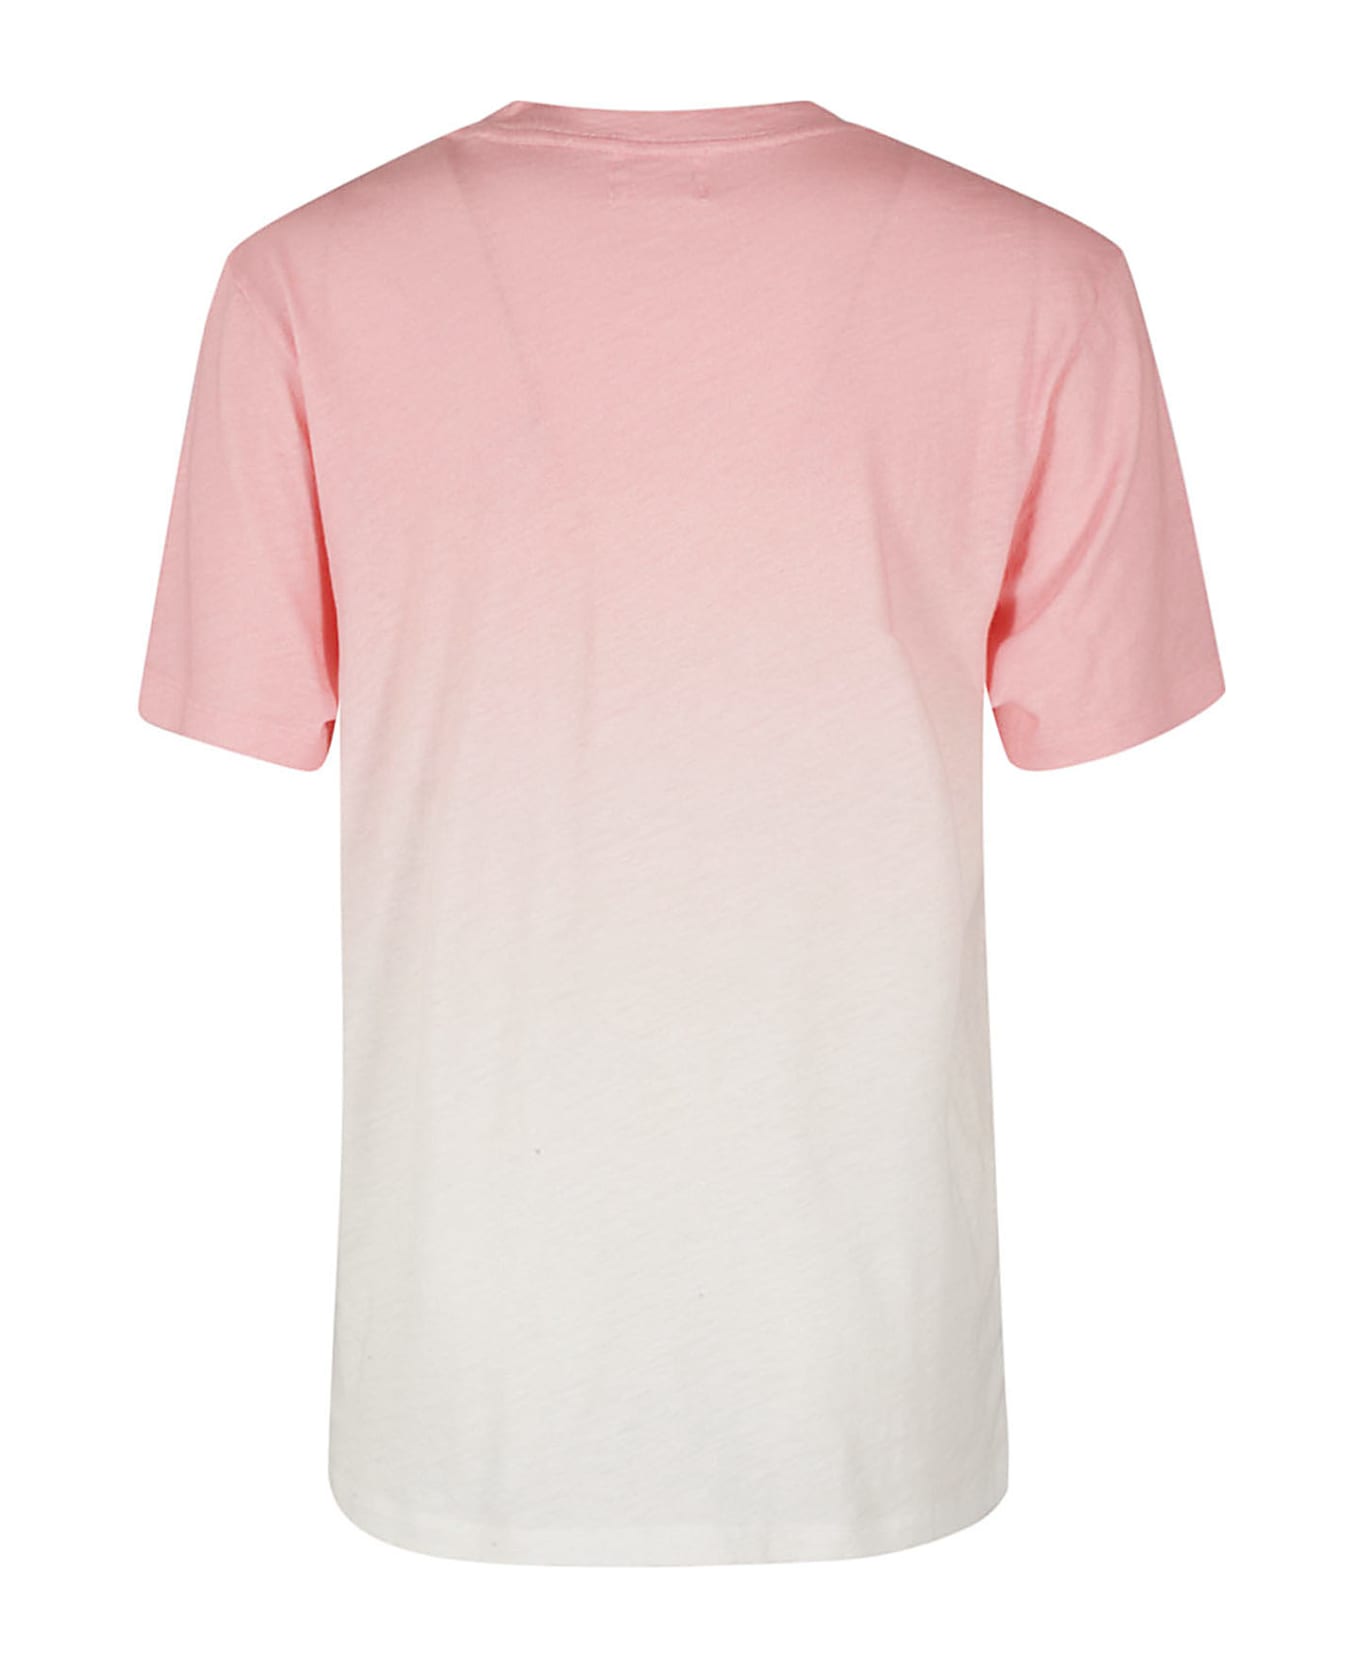 Marant Étoile Zewel - Lk Light Pink Tシャツ